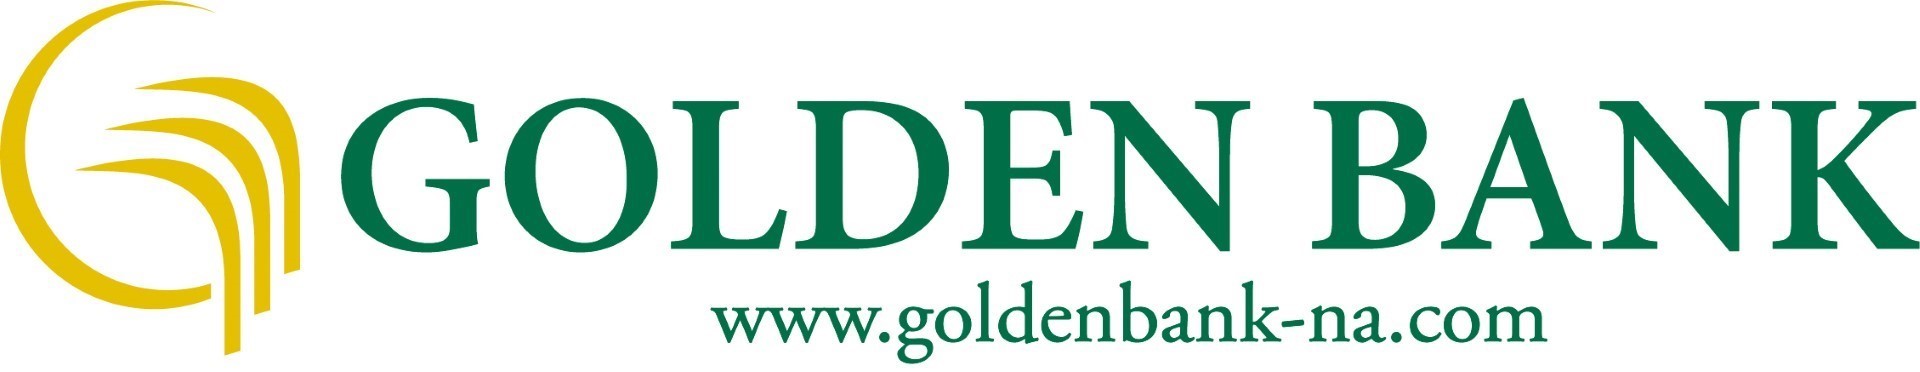 Golden-Bank-Logo-2.jpg